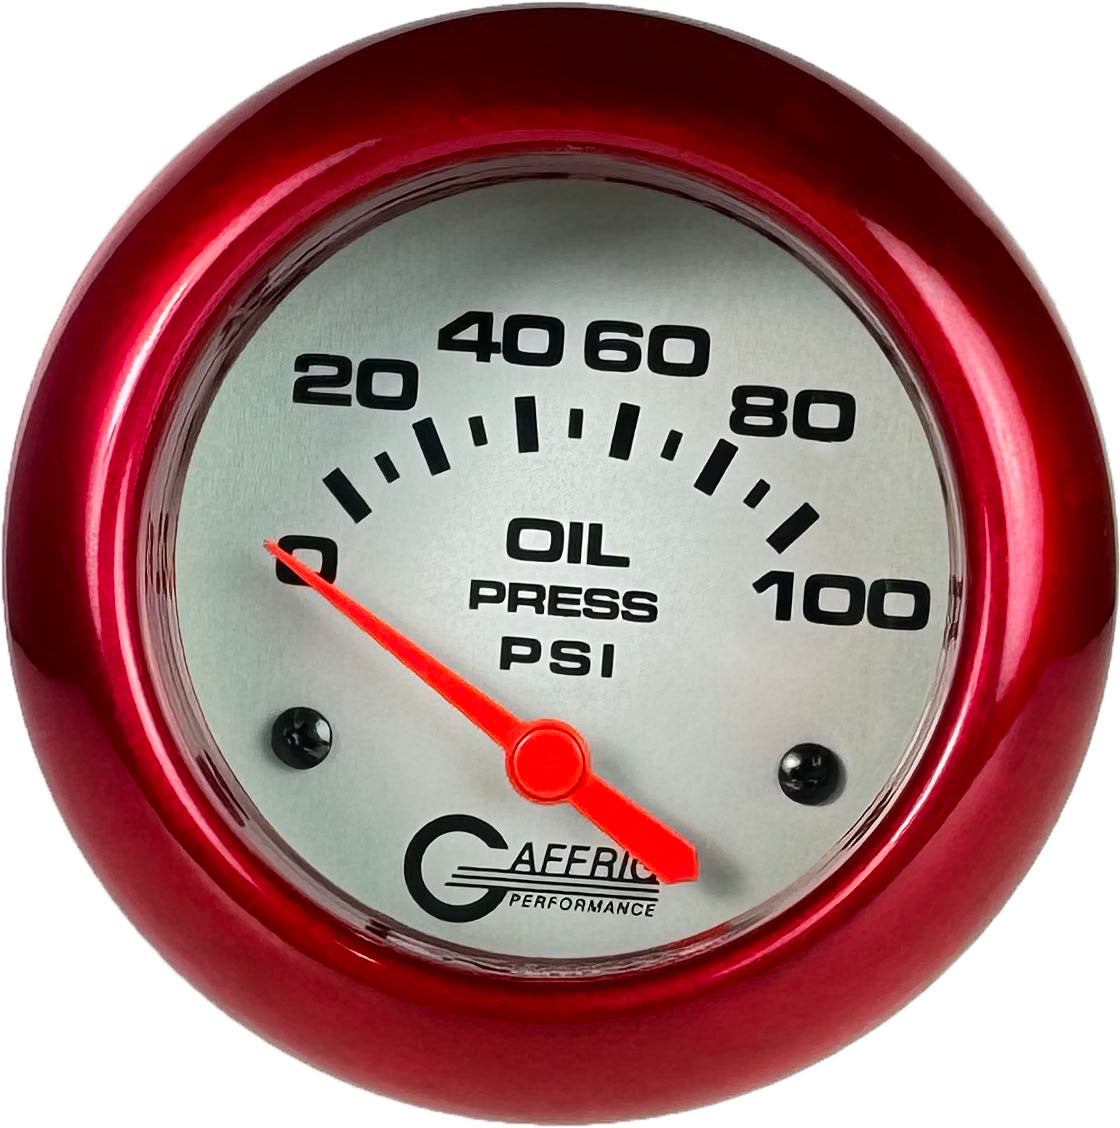 GAFFRIG PART #11002 2 5/8 INCH ELECTRIC OIL PRESSURE 0-100 PSI - INCLUDES SENDER PLATINUM RED